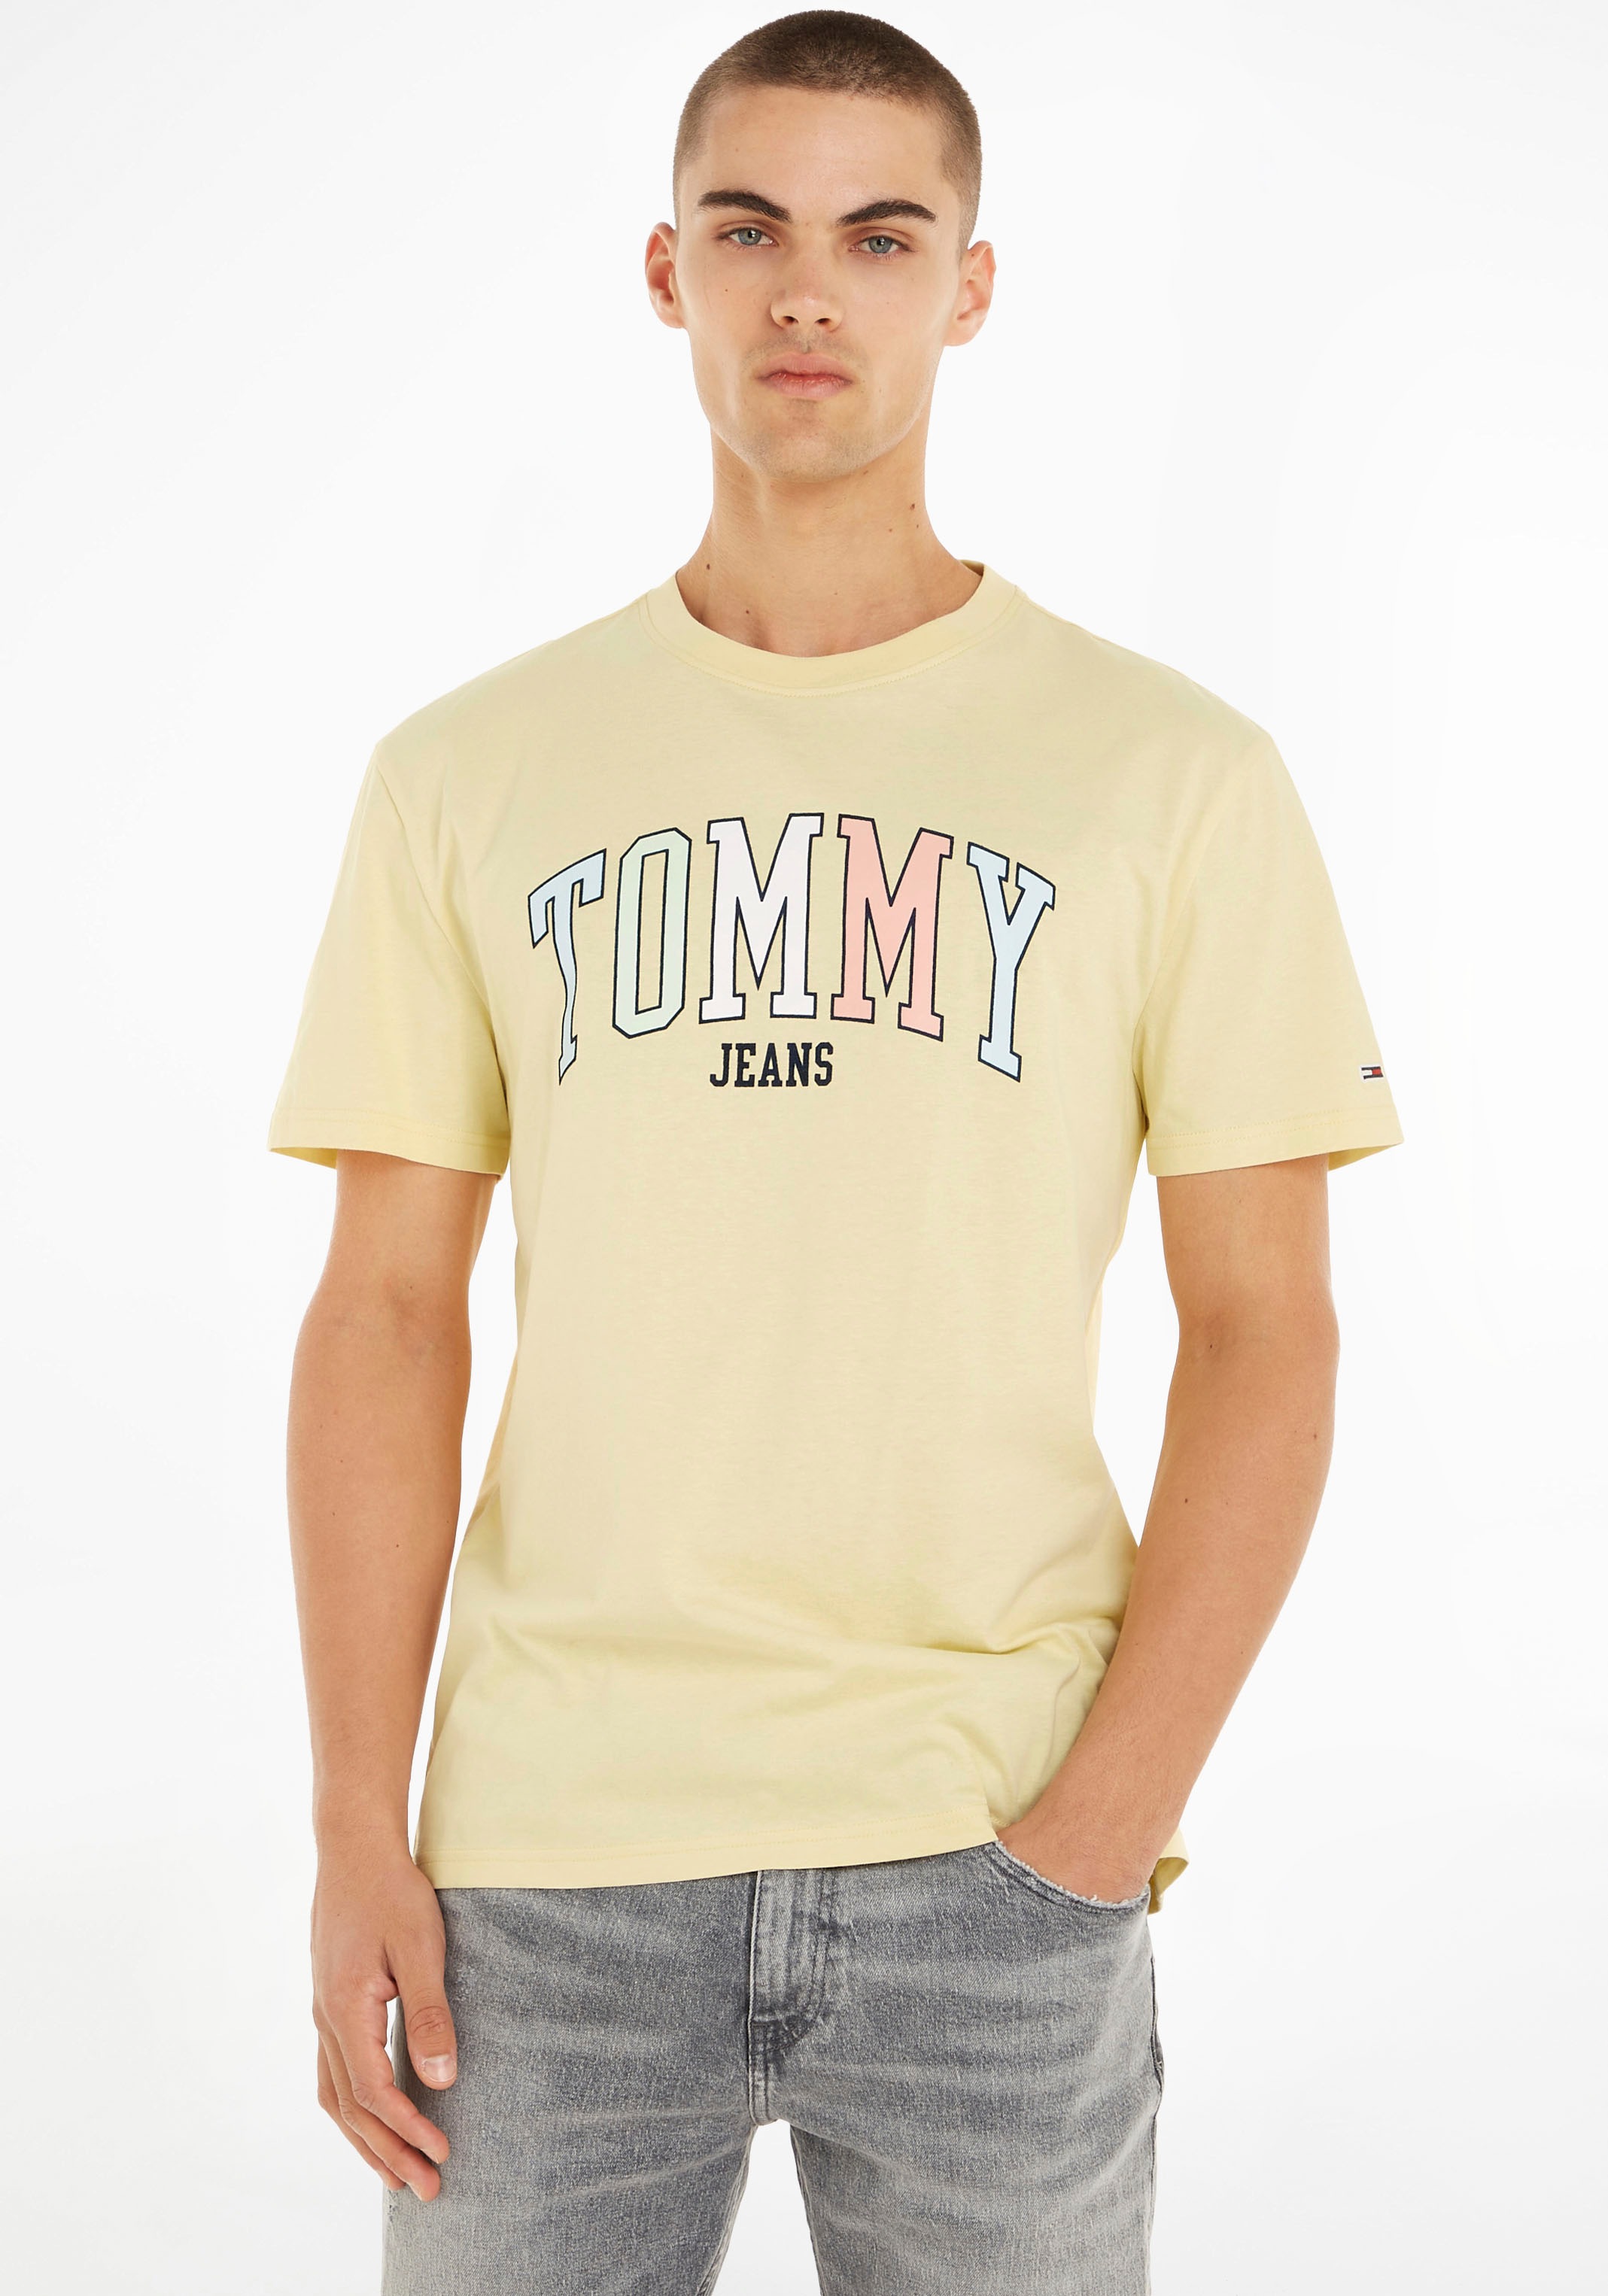 »TJM ♕ CLSC T-Shirt mit großem bei COLLEGE TEE«, Logo-Frontmotiv Tommy TOMMY POP Jeans